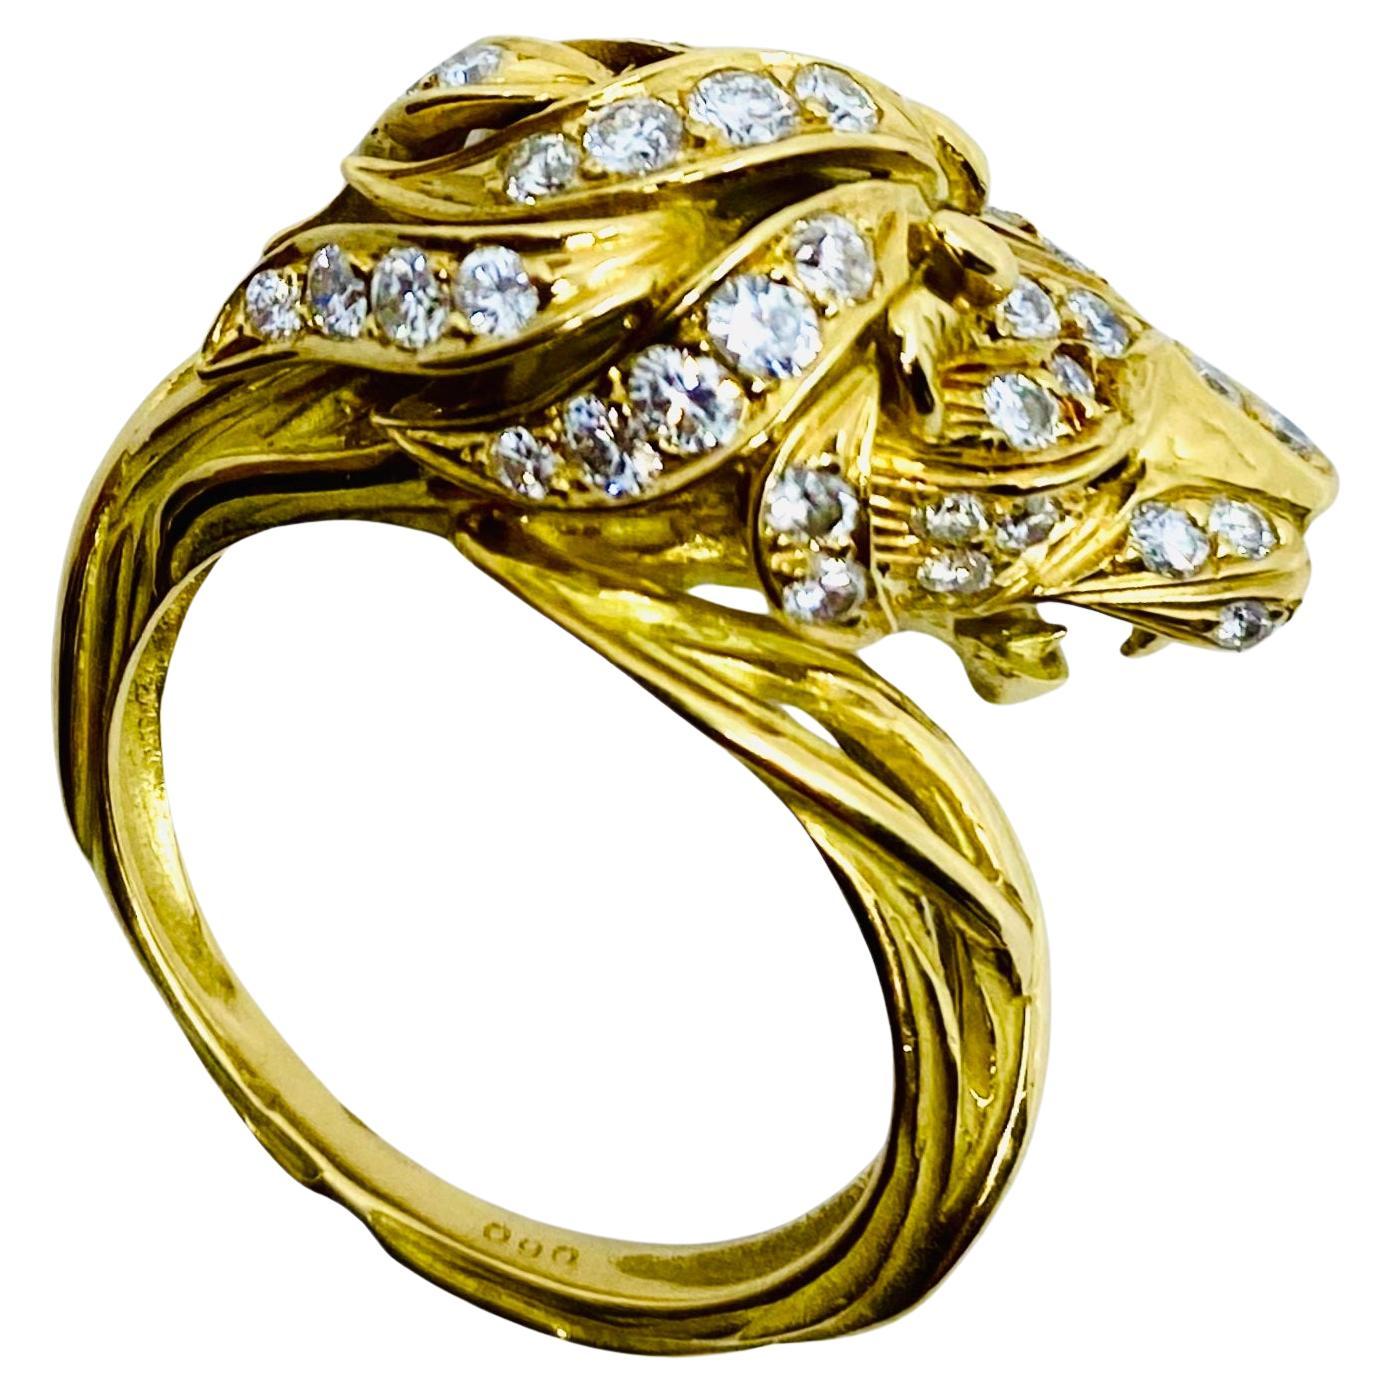 J.P. Bellin Leo Ring 18k Gold Gemstones 3